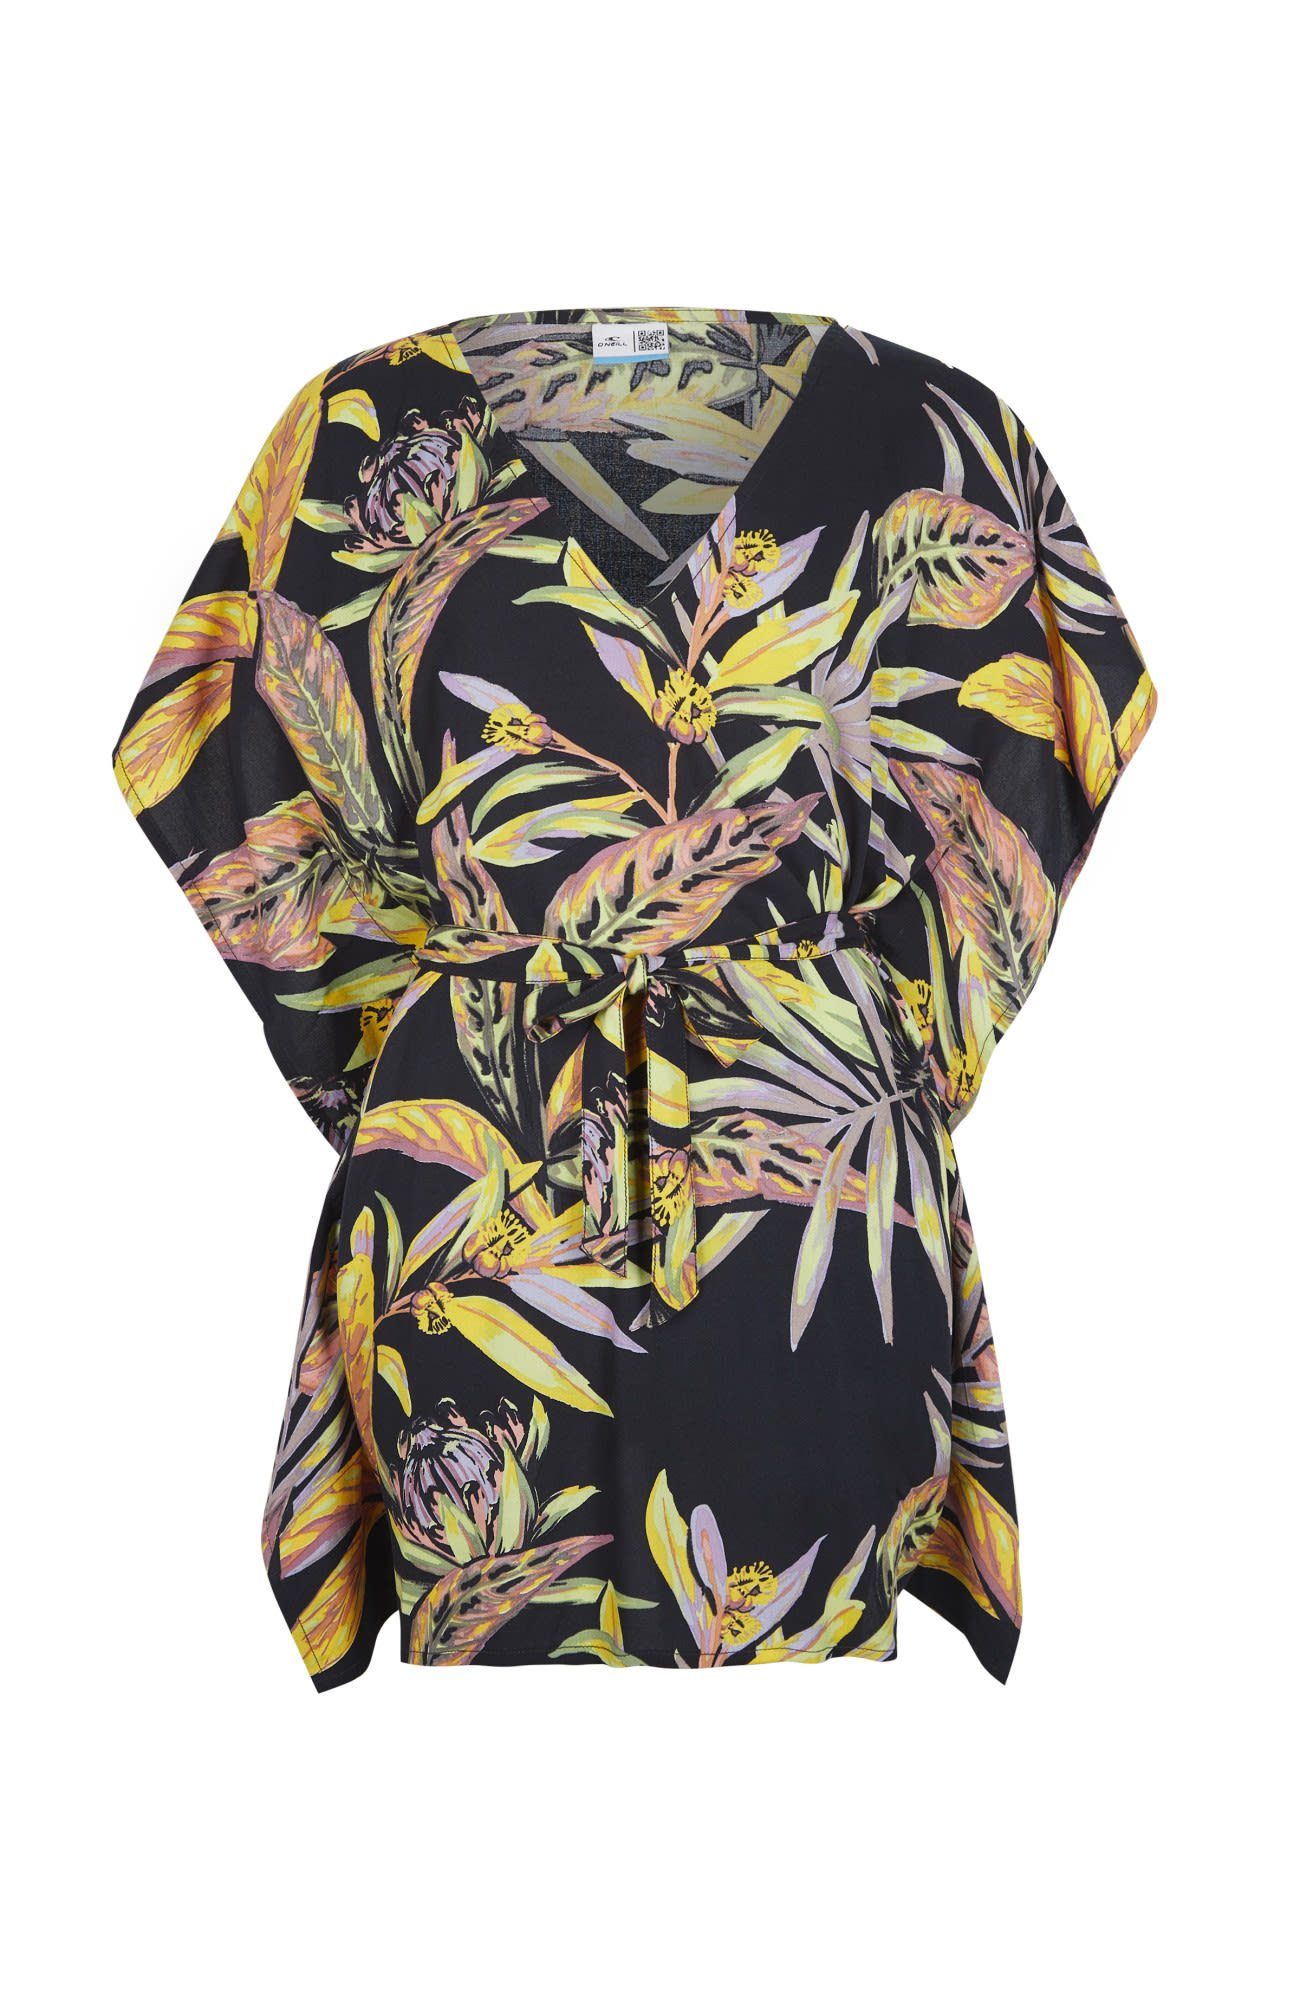 W Beach Tropical Kleid O'Neill Damen Sommerkleid Black Hana Flower Up Cover Oneill